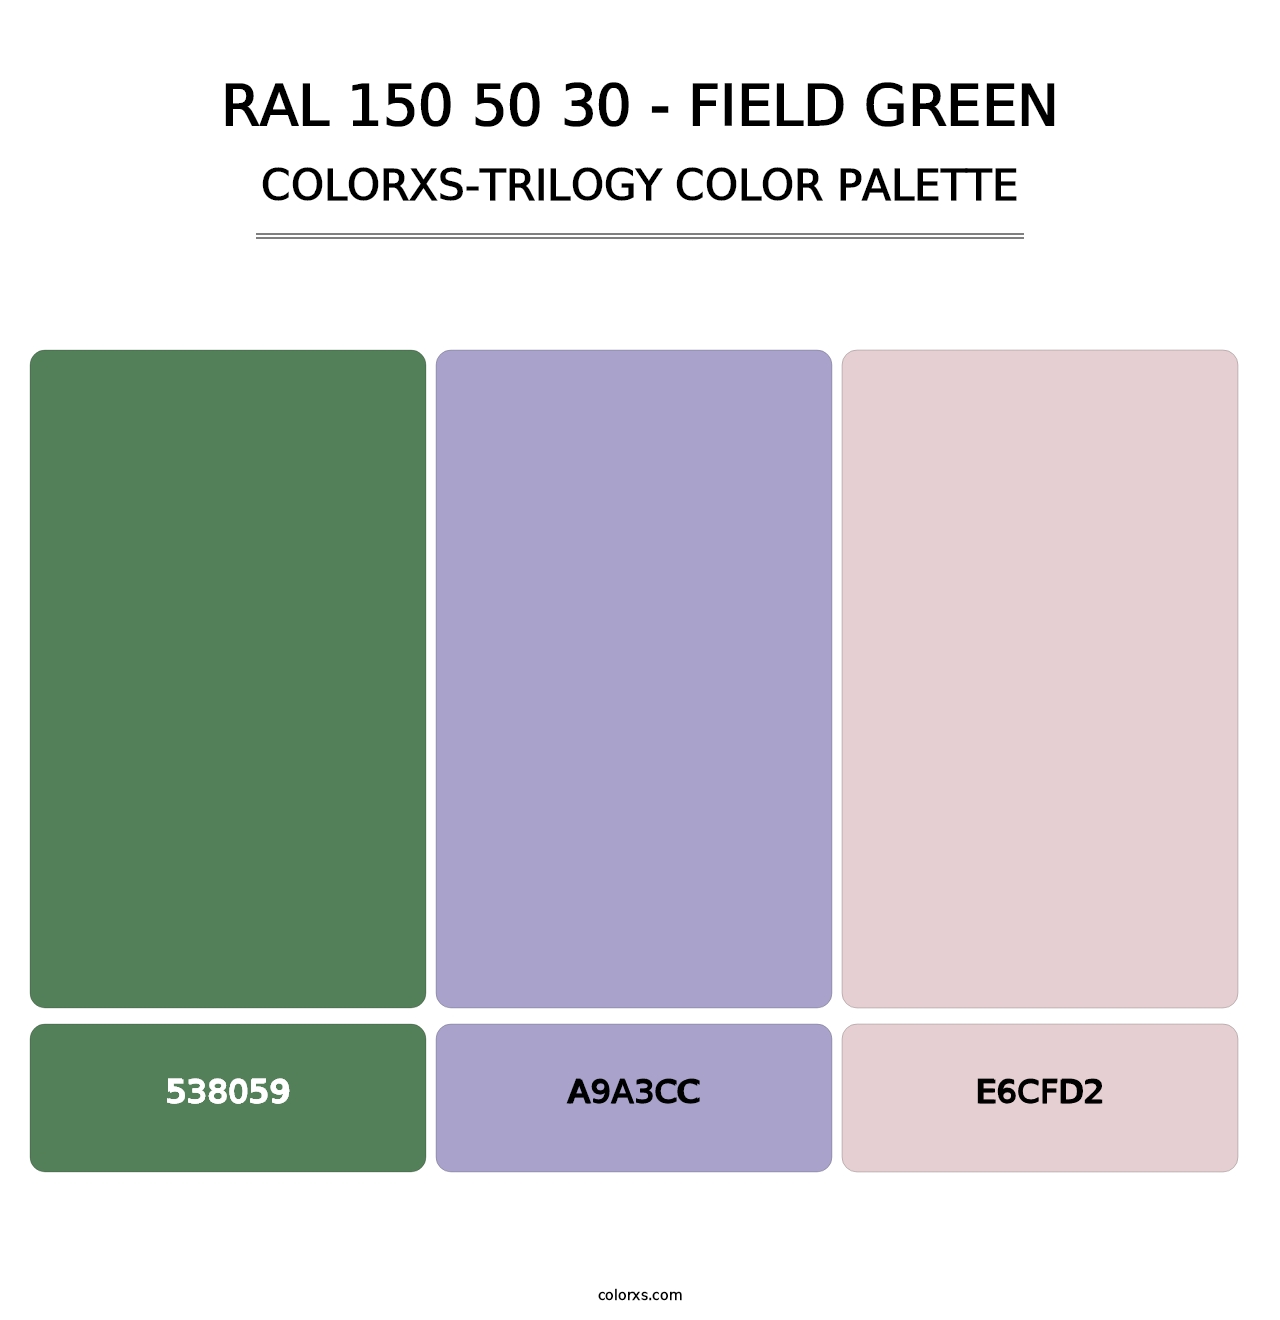 RAL 150 50 30 - Field Green - Colorxs Trilogy Palette